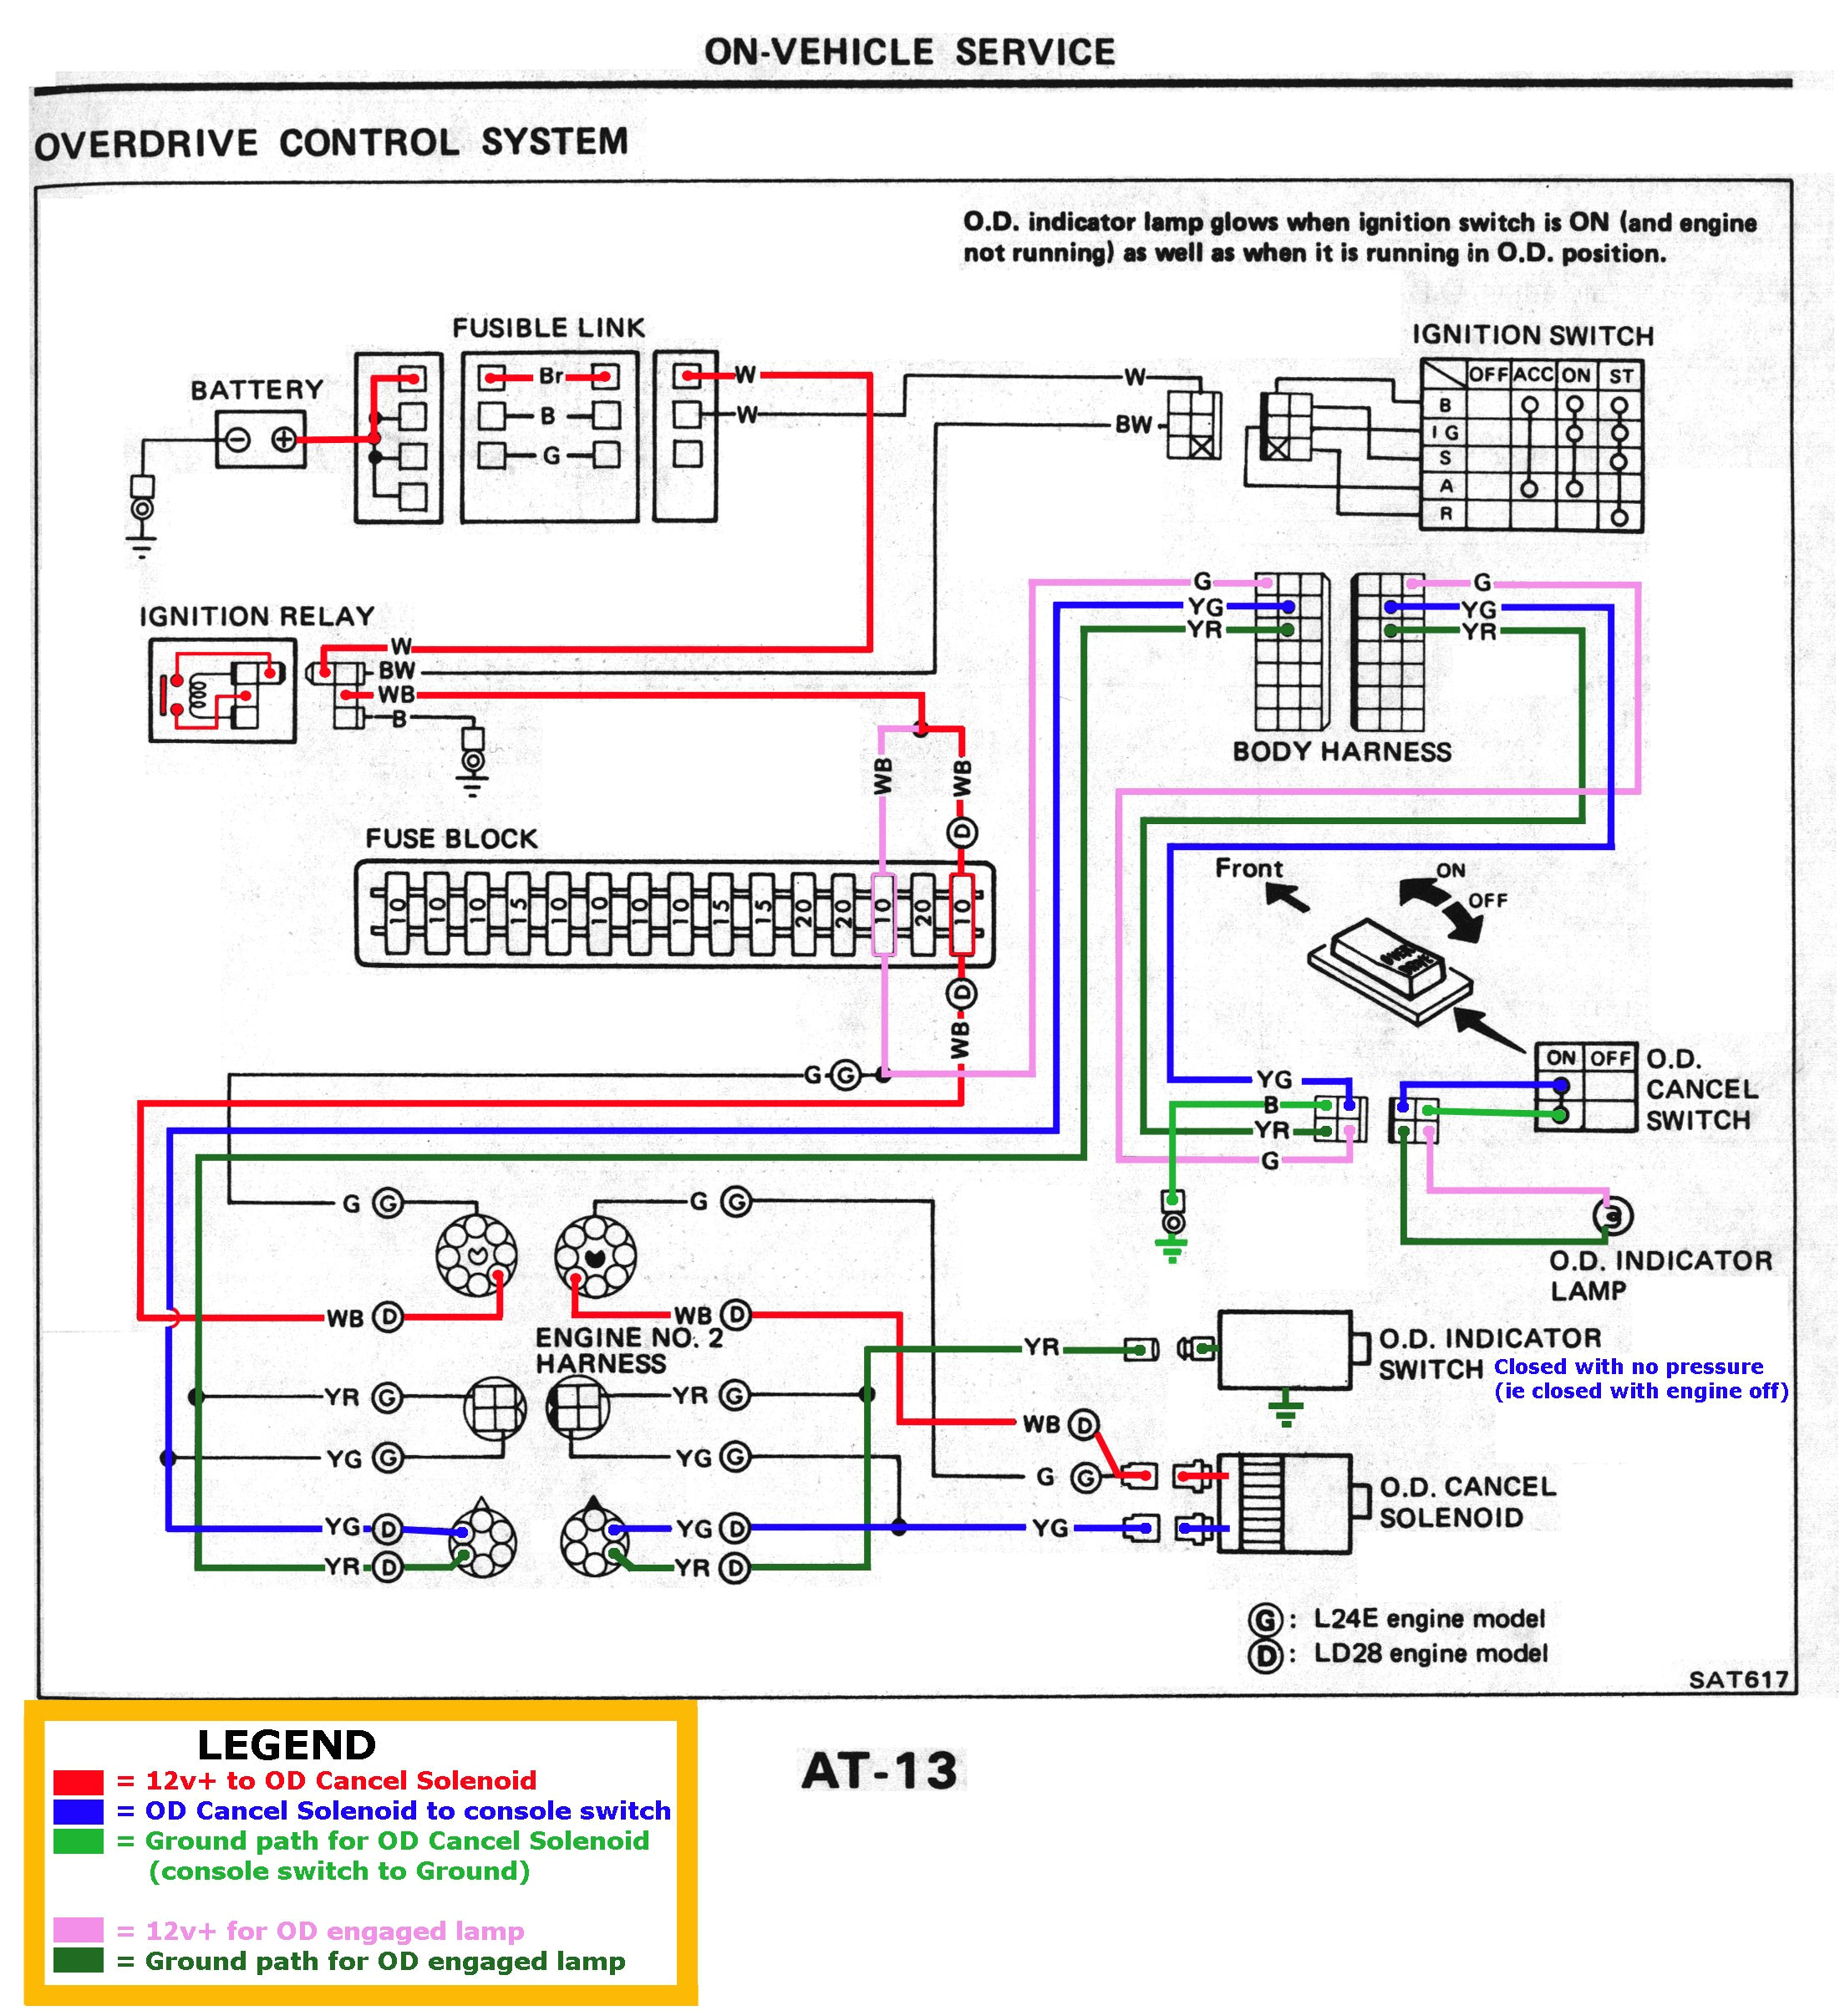 Mitsubishi Truck Wiring Diagram Mitsubishi 7 Wire Tsi Diagram Online Manuual Of Wiring Diagram